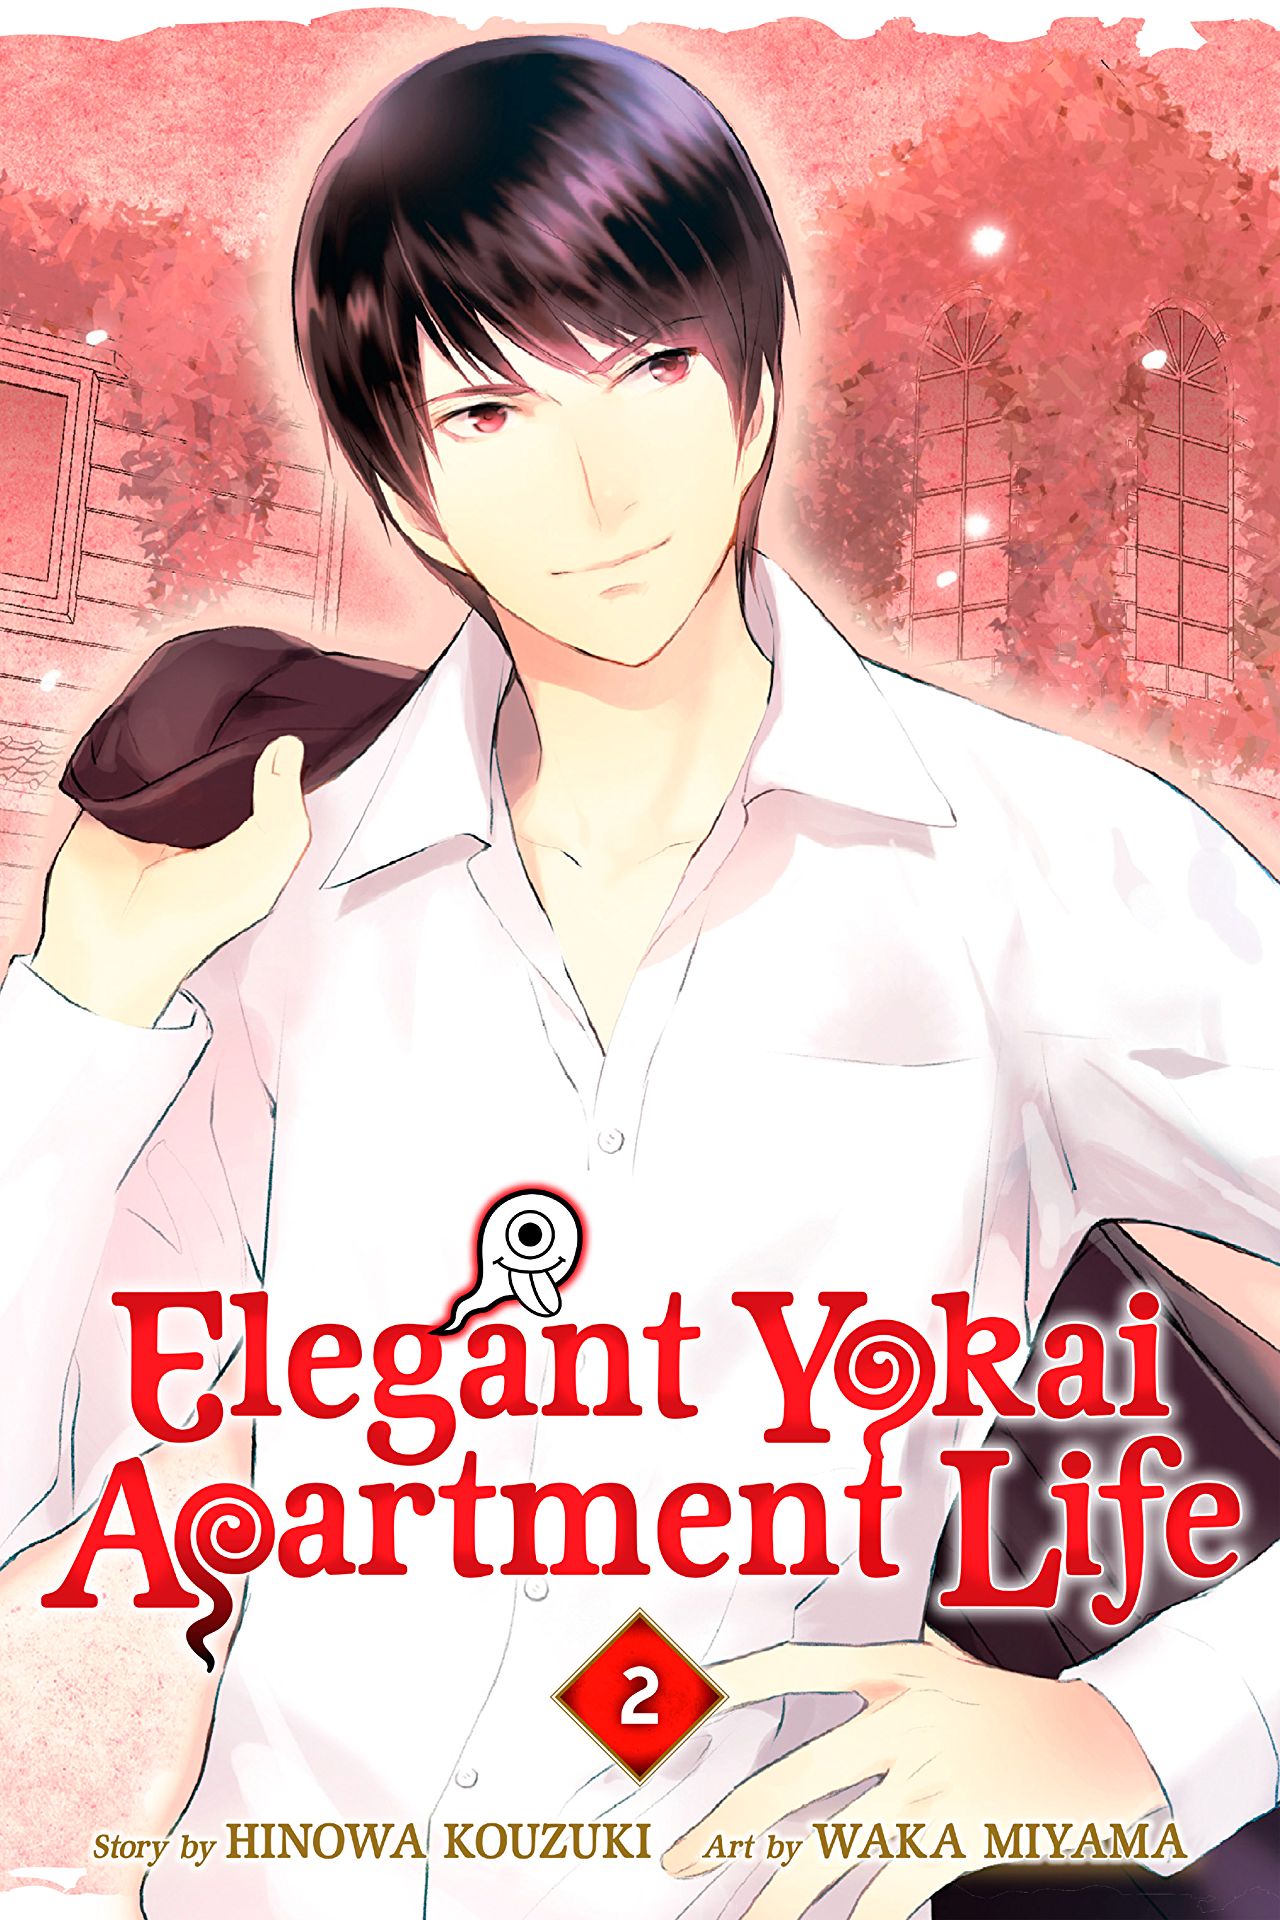 Elegant Yokai Apartment Life Vol. 2 Review